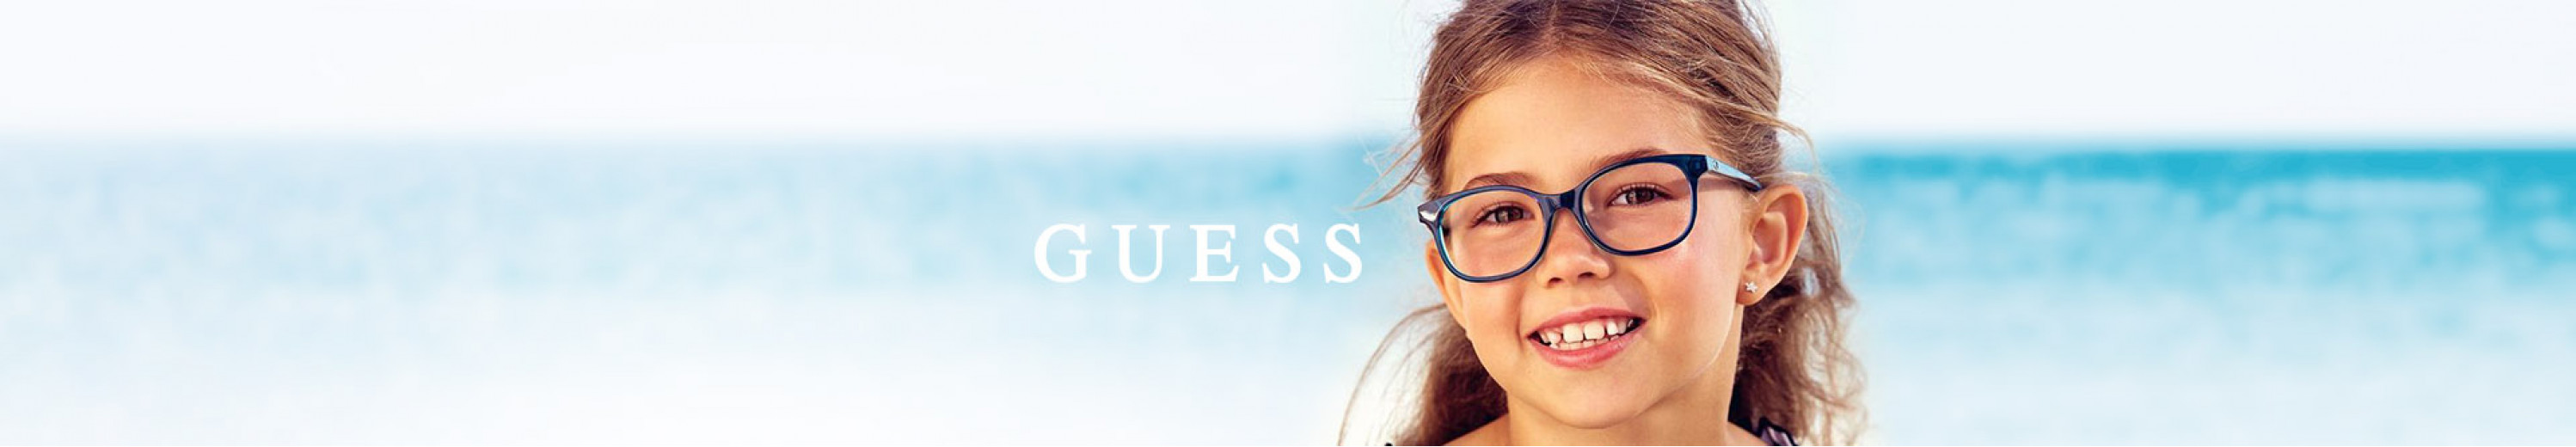 Guess Eyeglasses for Kids